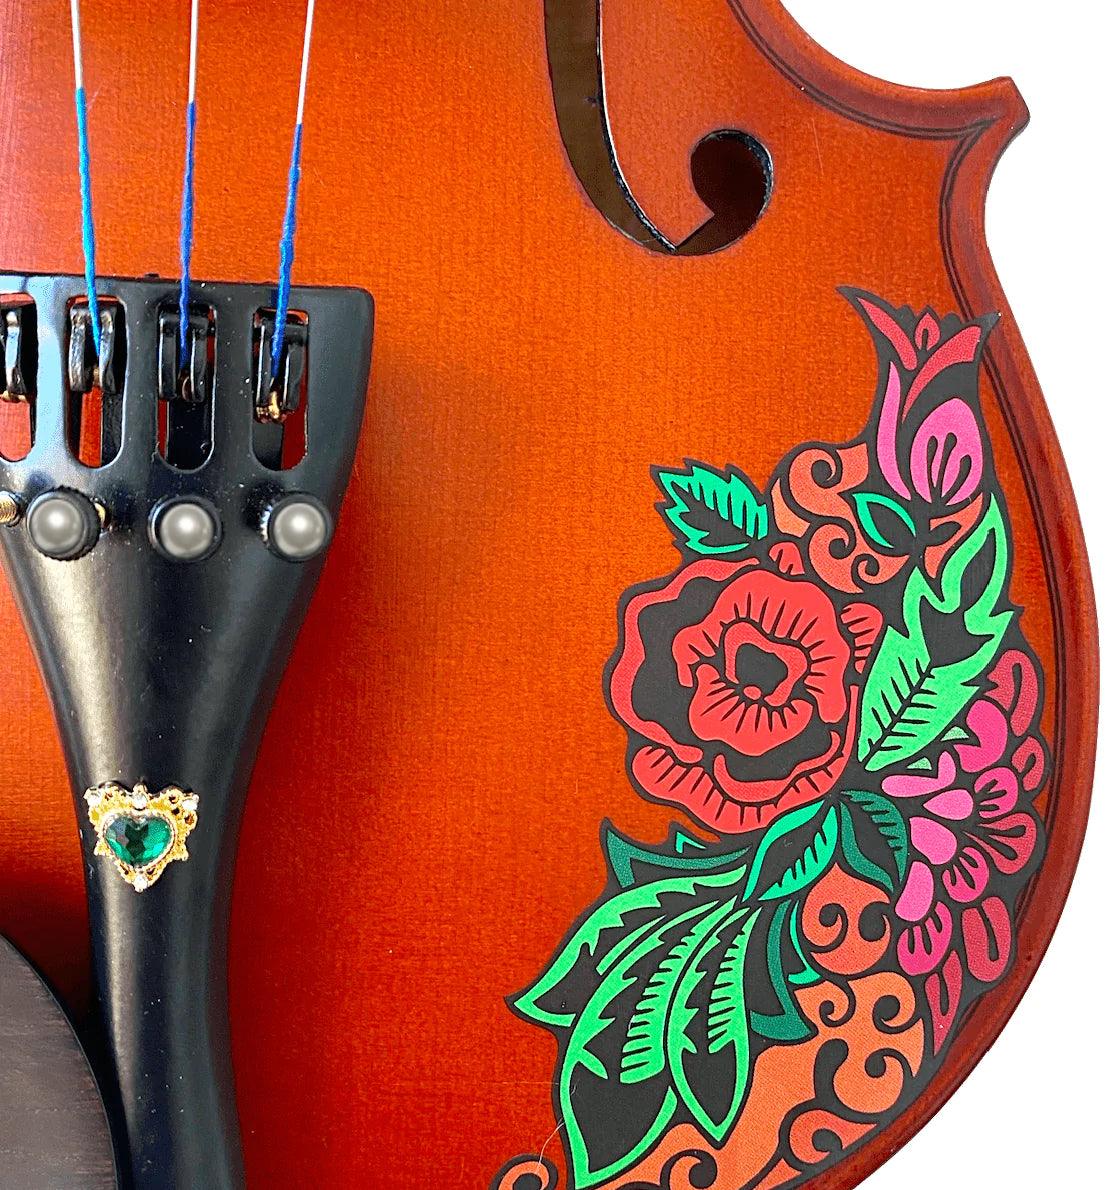 Rozanna's Rose Tattoo Violin Outfit - Rozanna's Violins